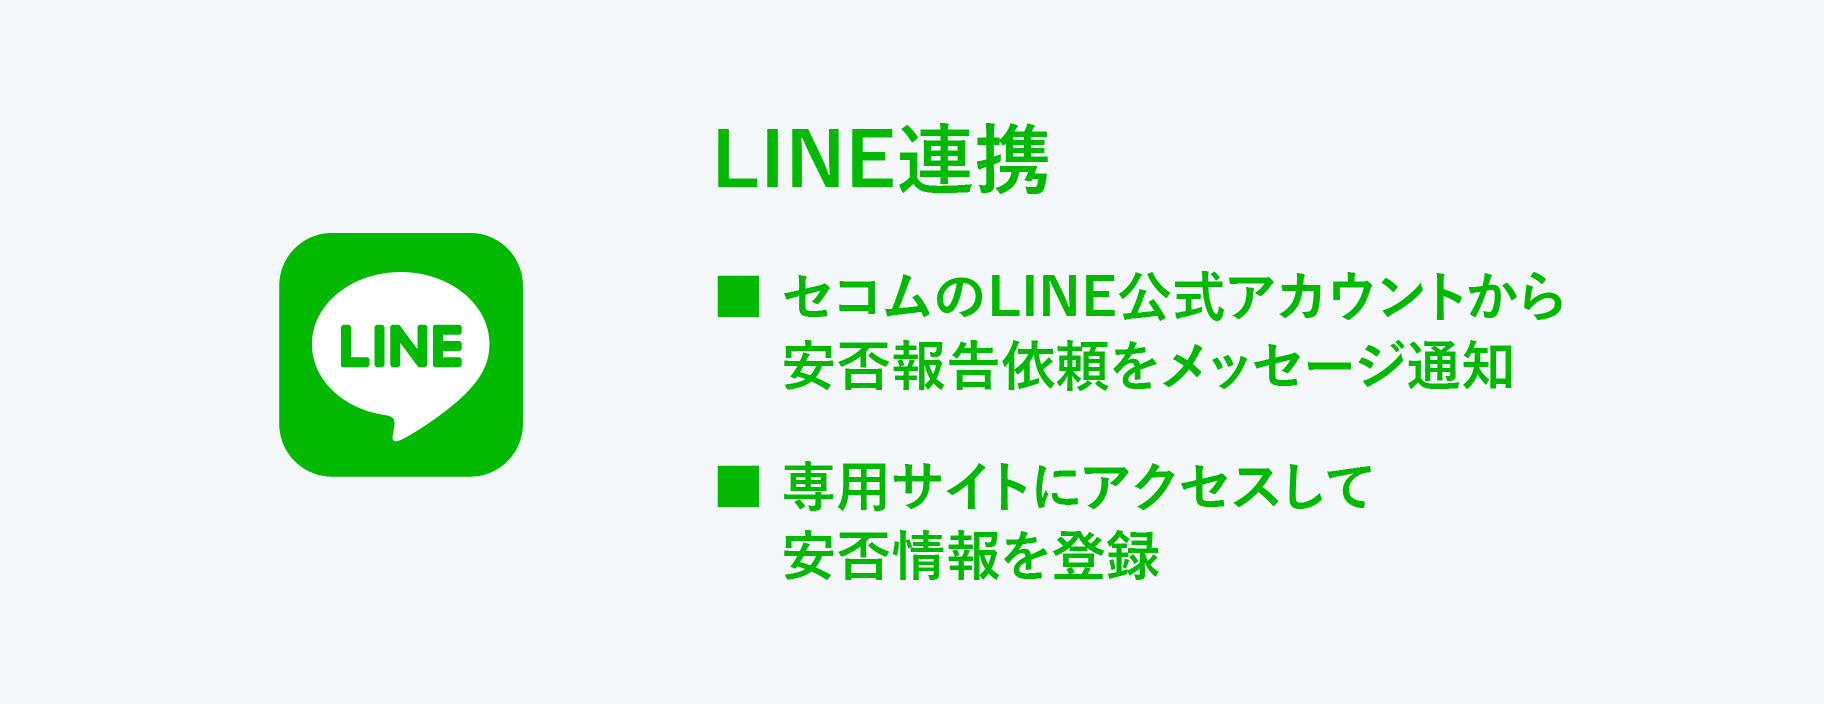 LINEを使った安否報告